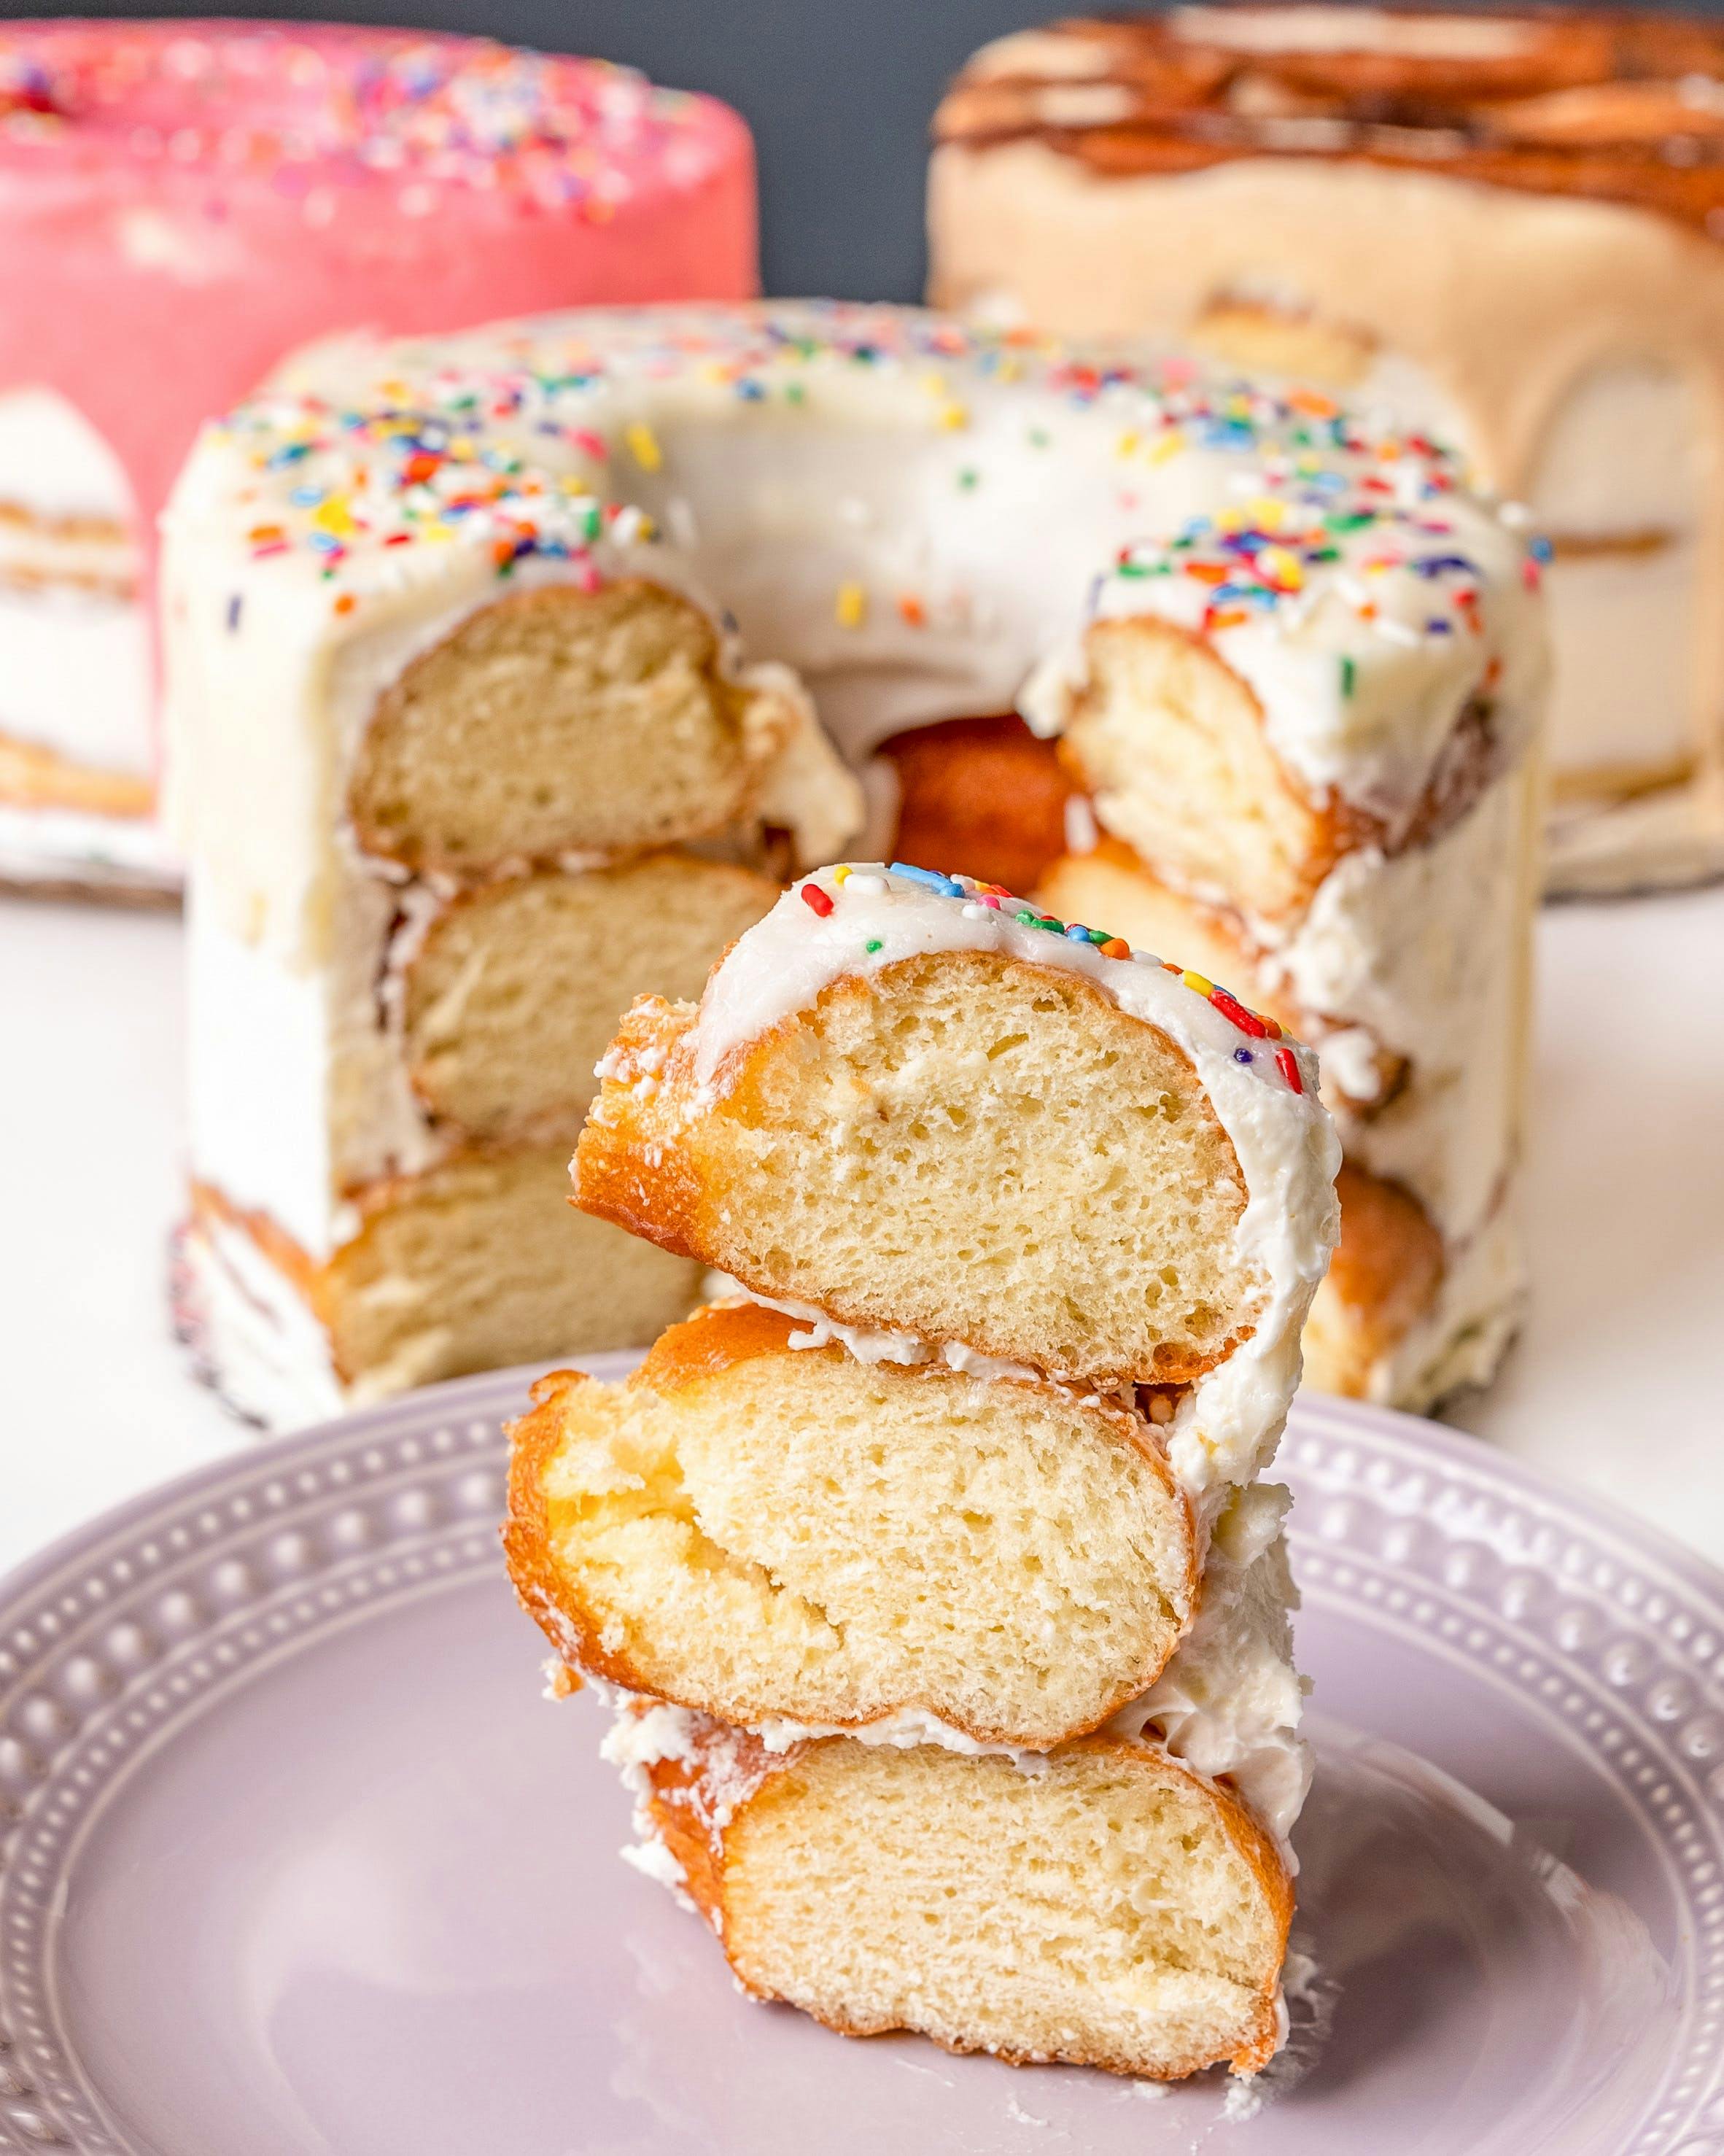 Amazon.com: Webake Jumbo Silicone Donut Cake Pan Non-Stick Bagel Cake Mold  10 inch Set of 2 Halves Baking Molds: Home & Kitchen